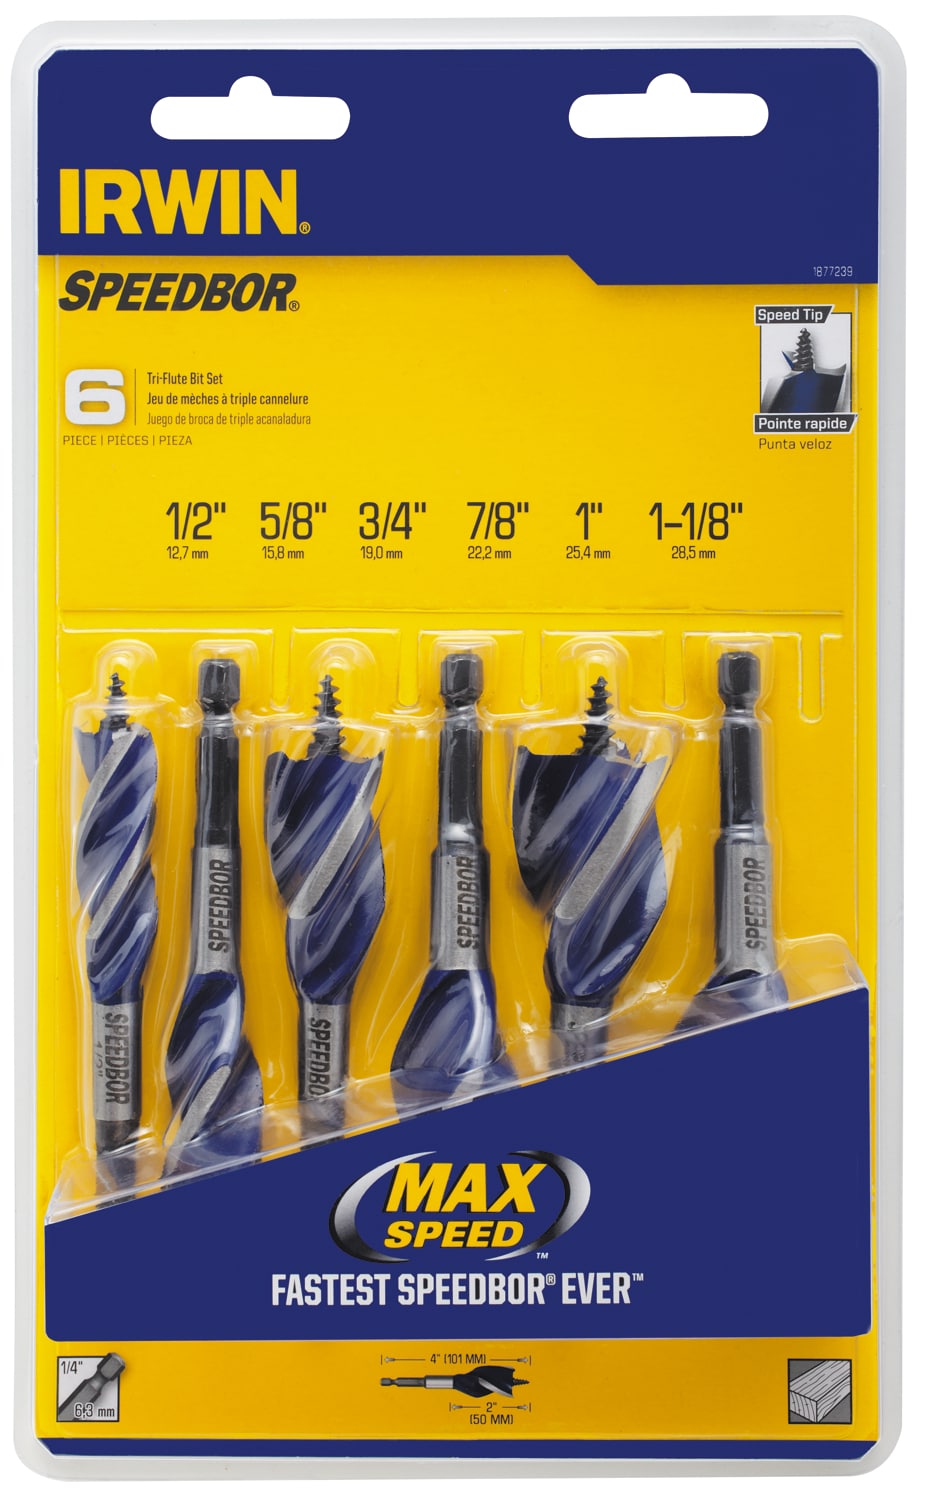 IRWIN Speedbor Max 6-Piece x 4-in Woodboring Self-feed Drill Bit